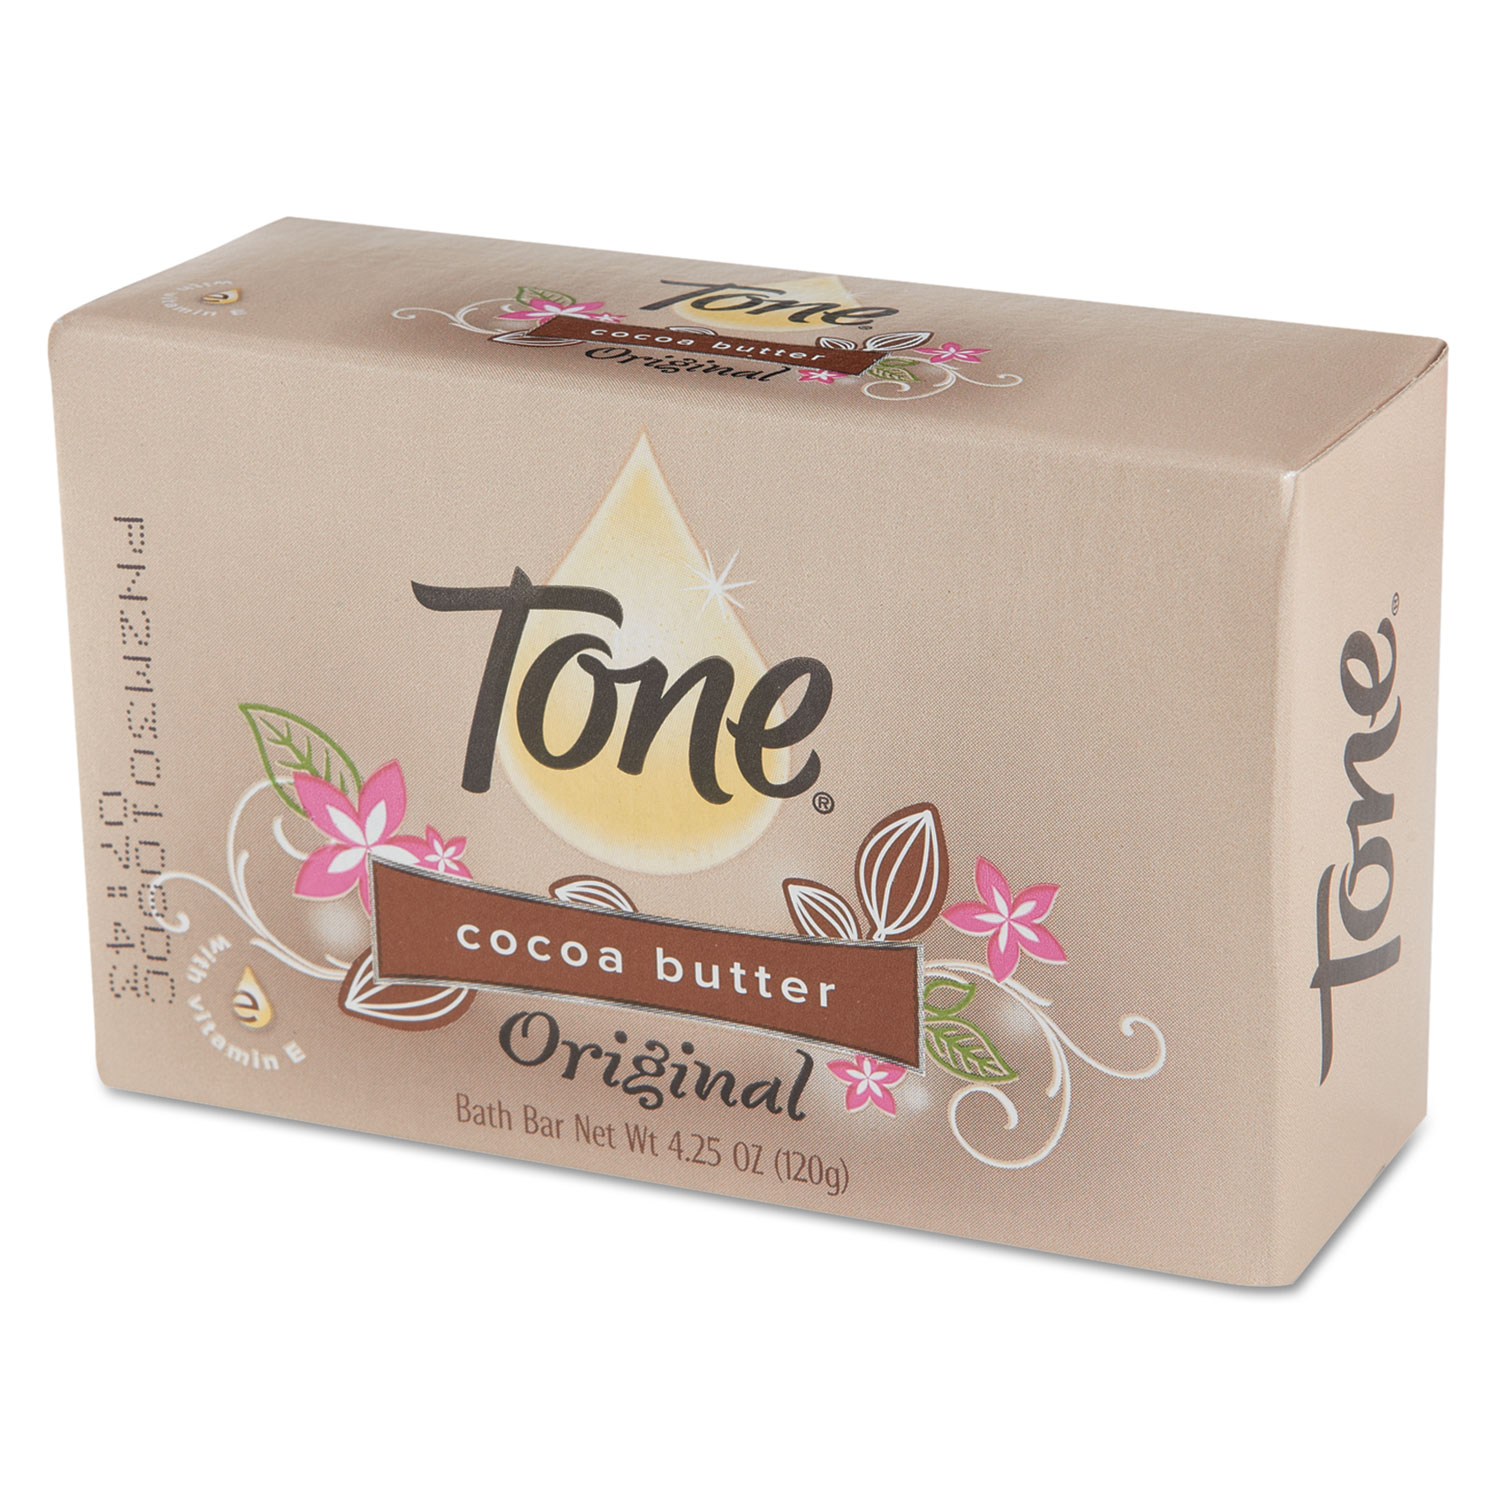  Tone 99270 Skin Care Bar Soap, Almond Color, 4 1/4 oz Individually Wrapped Bar, 48/Carton (DIA99270) 